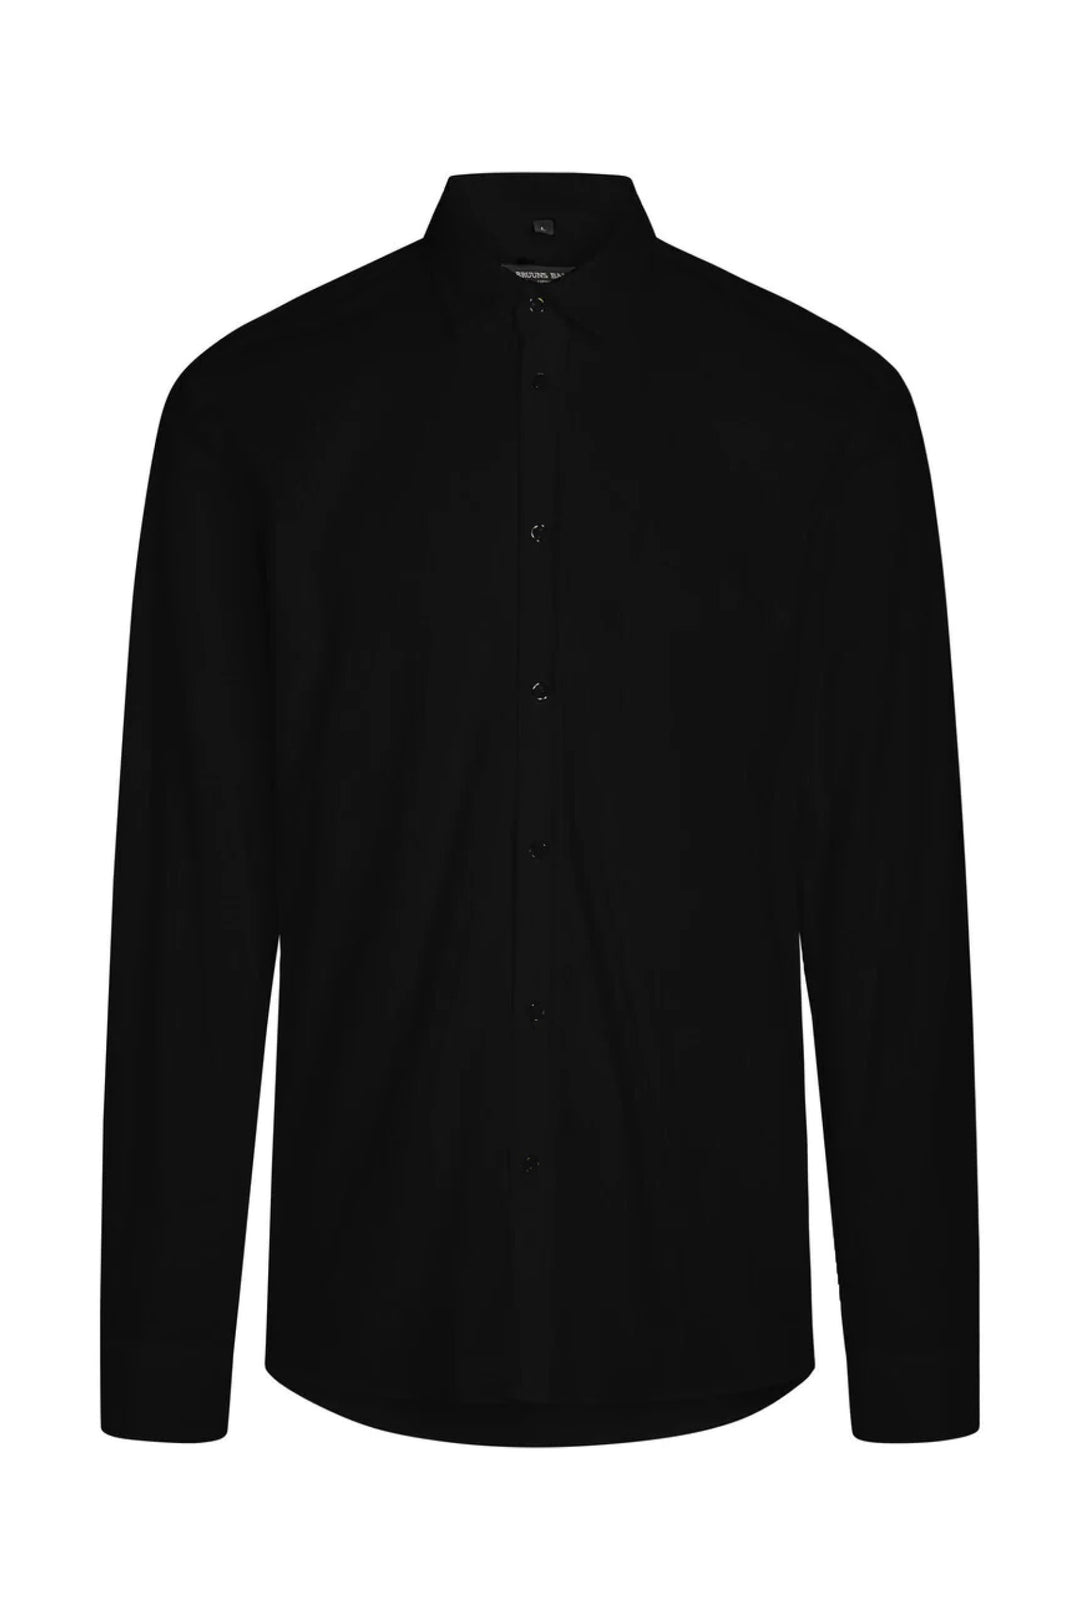 Bruuns Bazaar Men PiqueBBNorman shirt Shirts Black